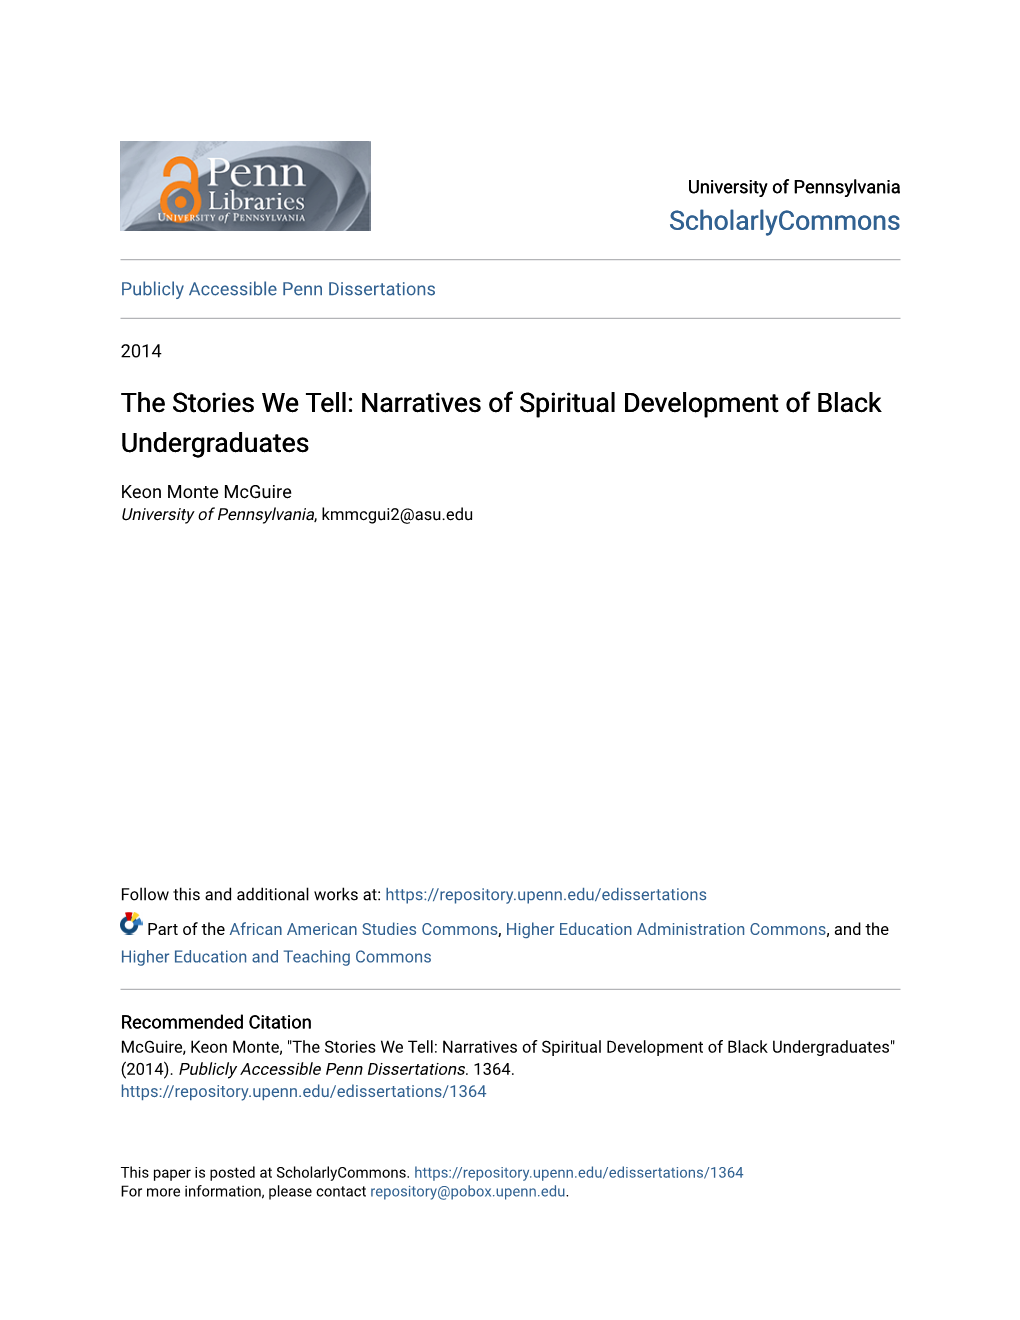 Narratives of Spiritual Development of Black Undergraduates